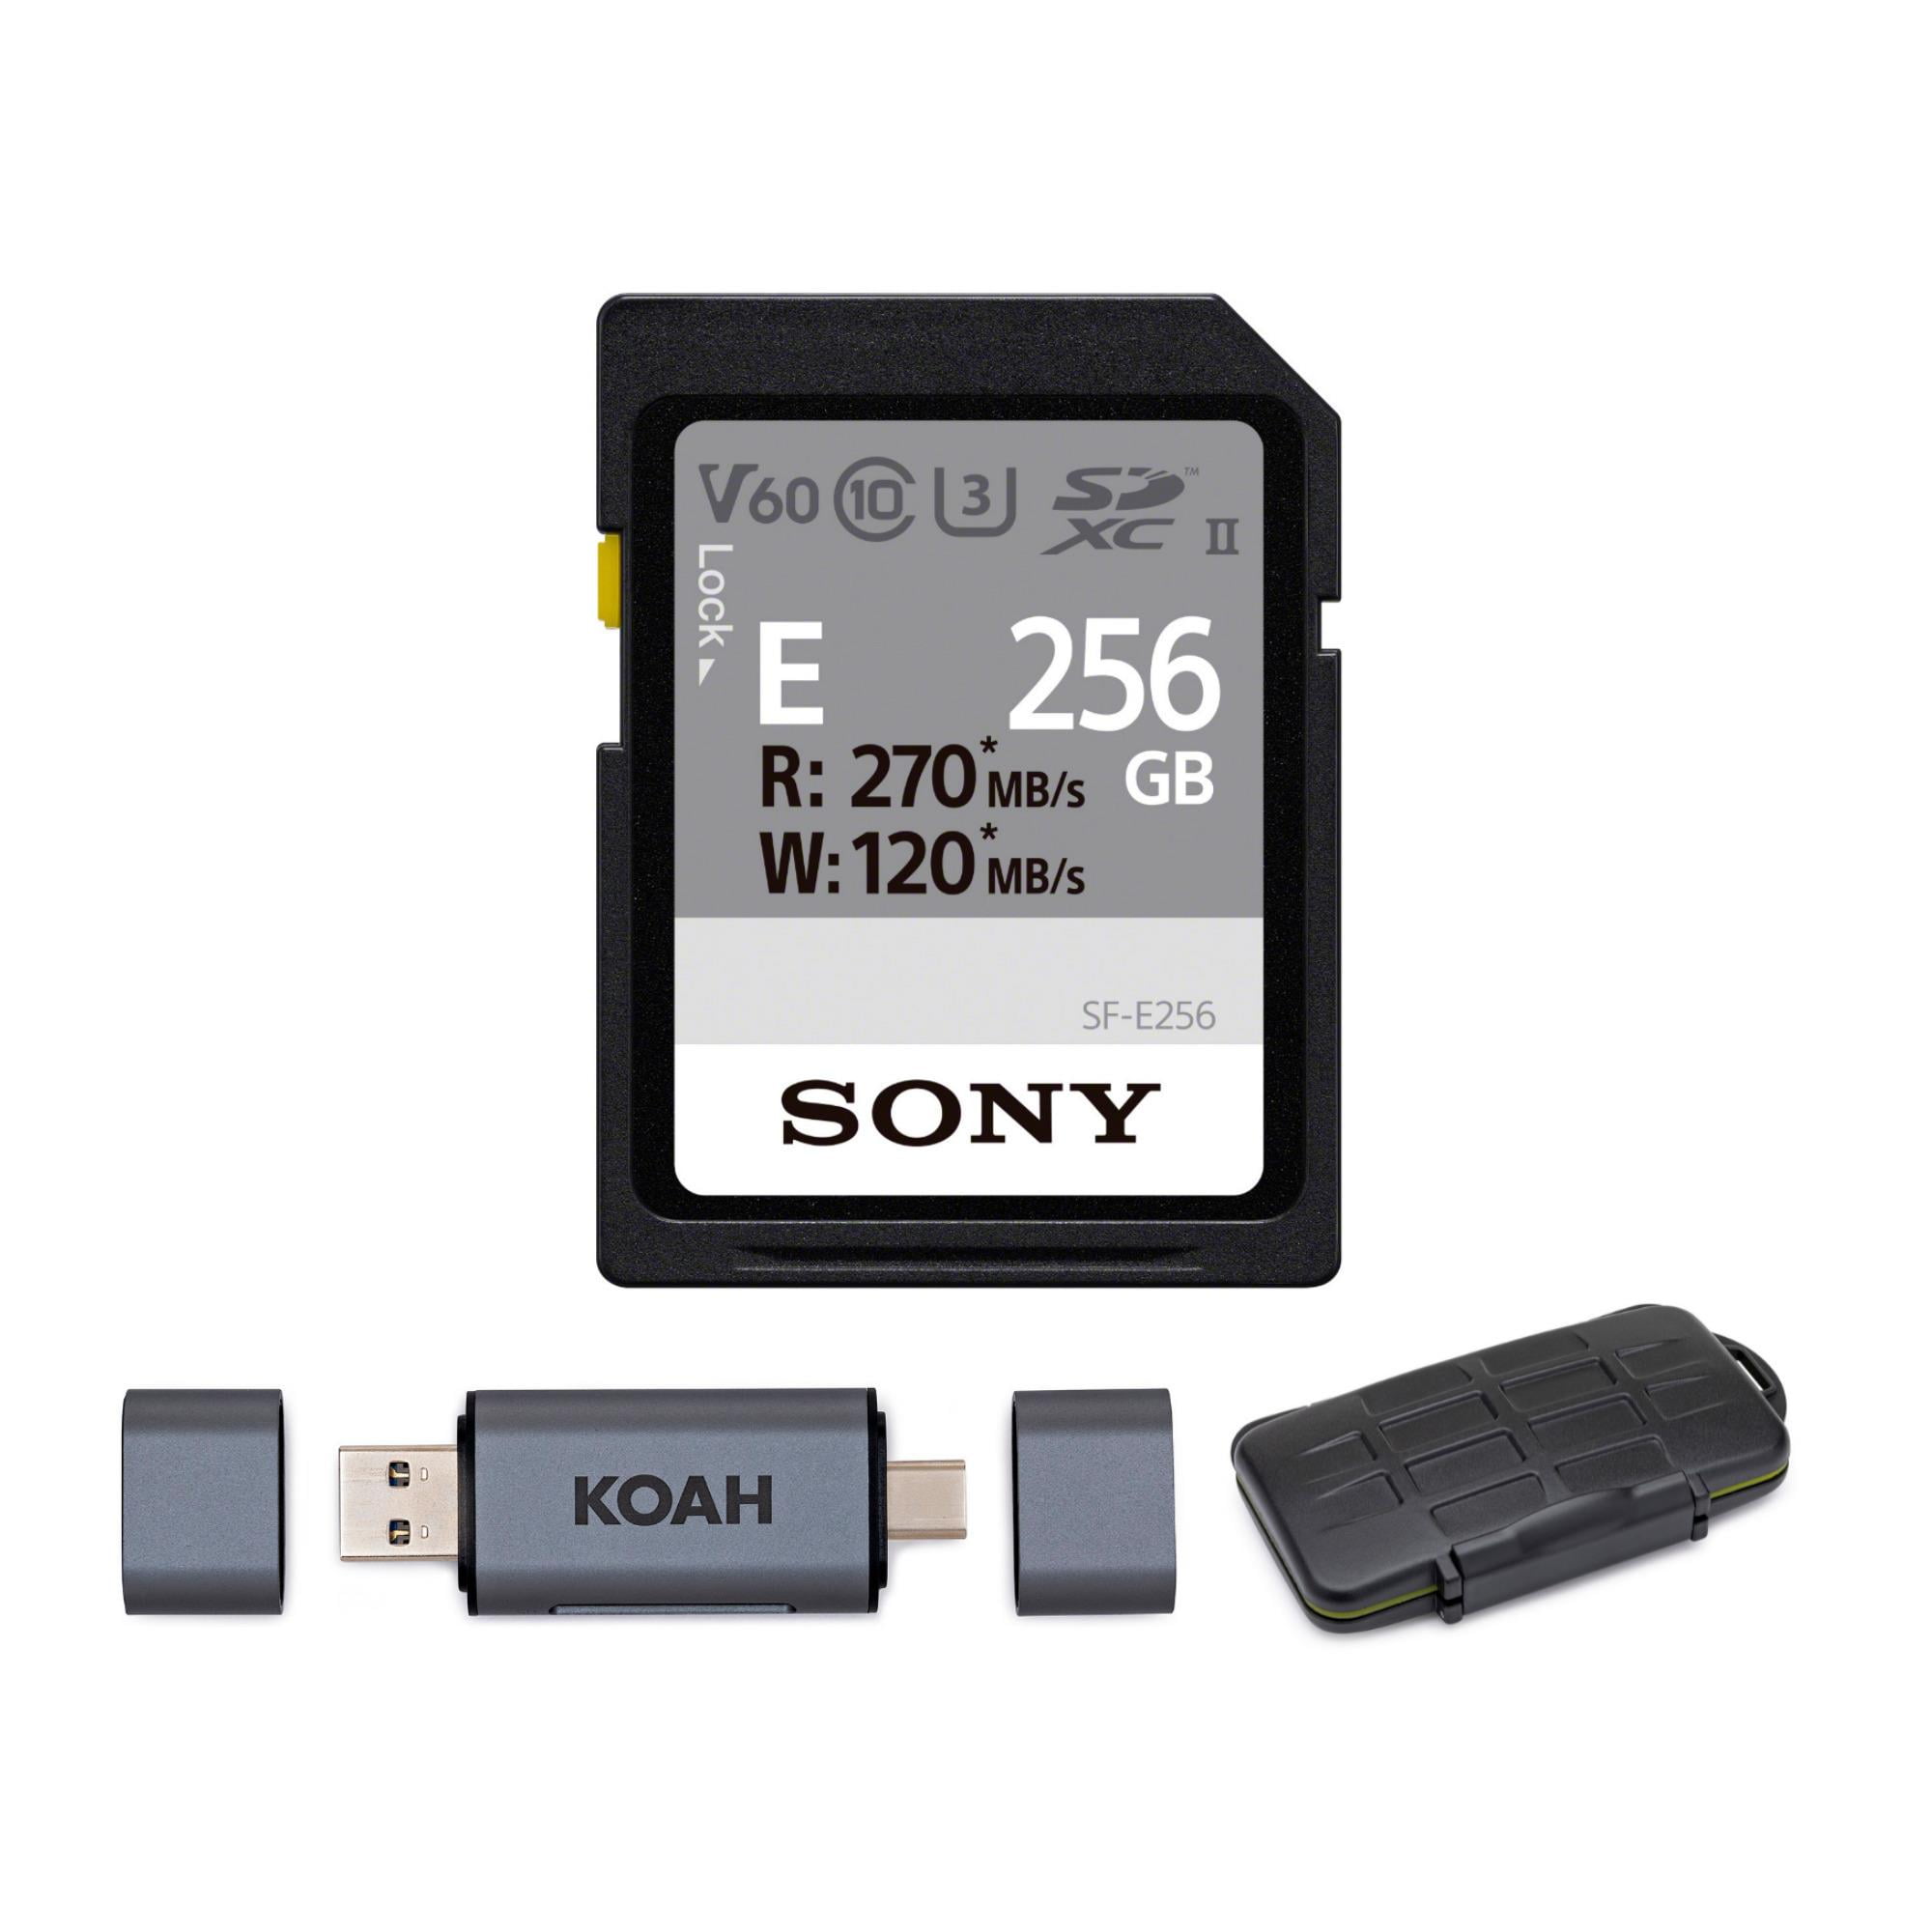 vertaler Zeggen Conclusie Sony 256GB E-Series High Speed SD Card with Koah Card Reader and Storage  Case - Walmart.com